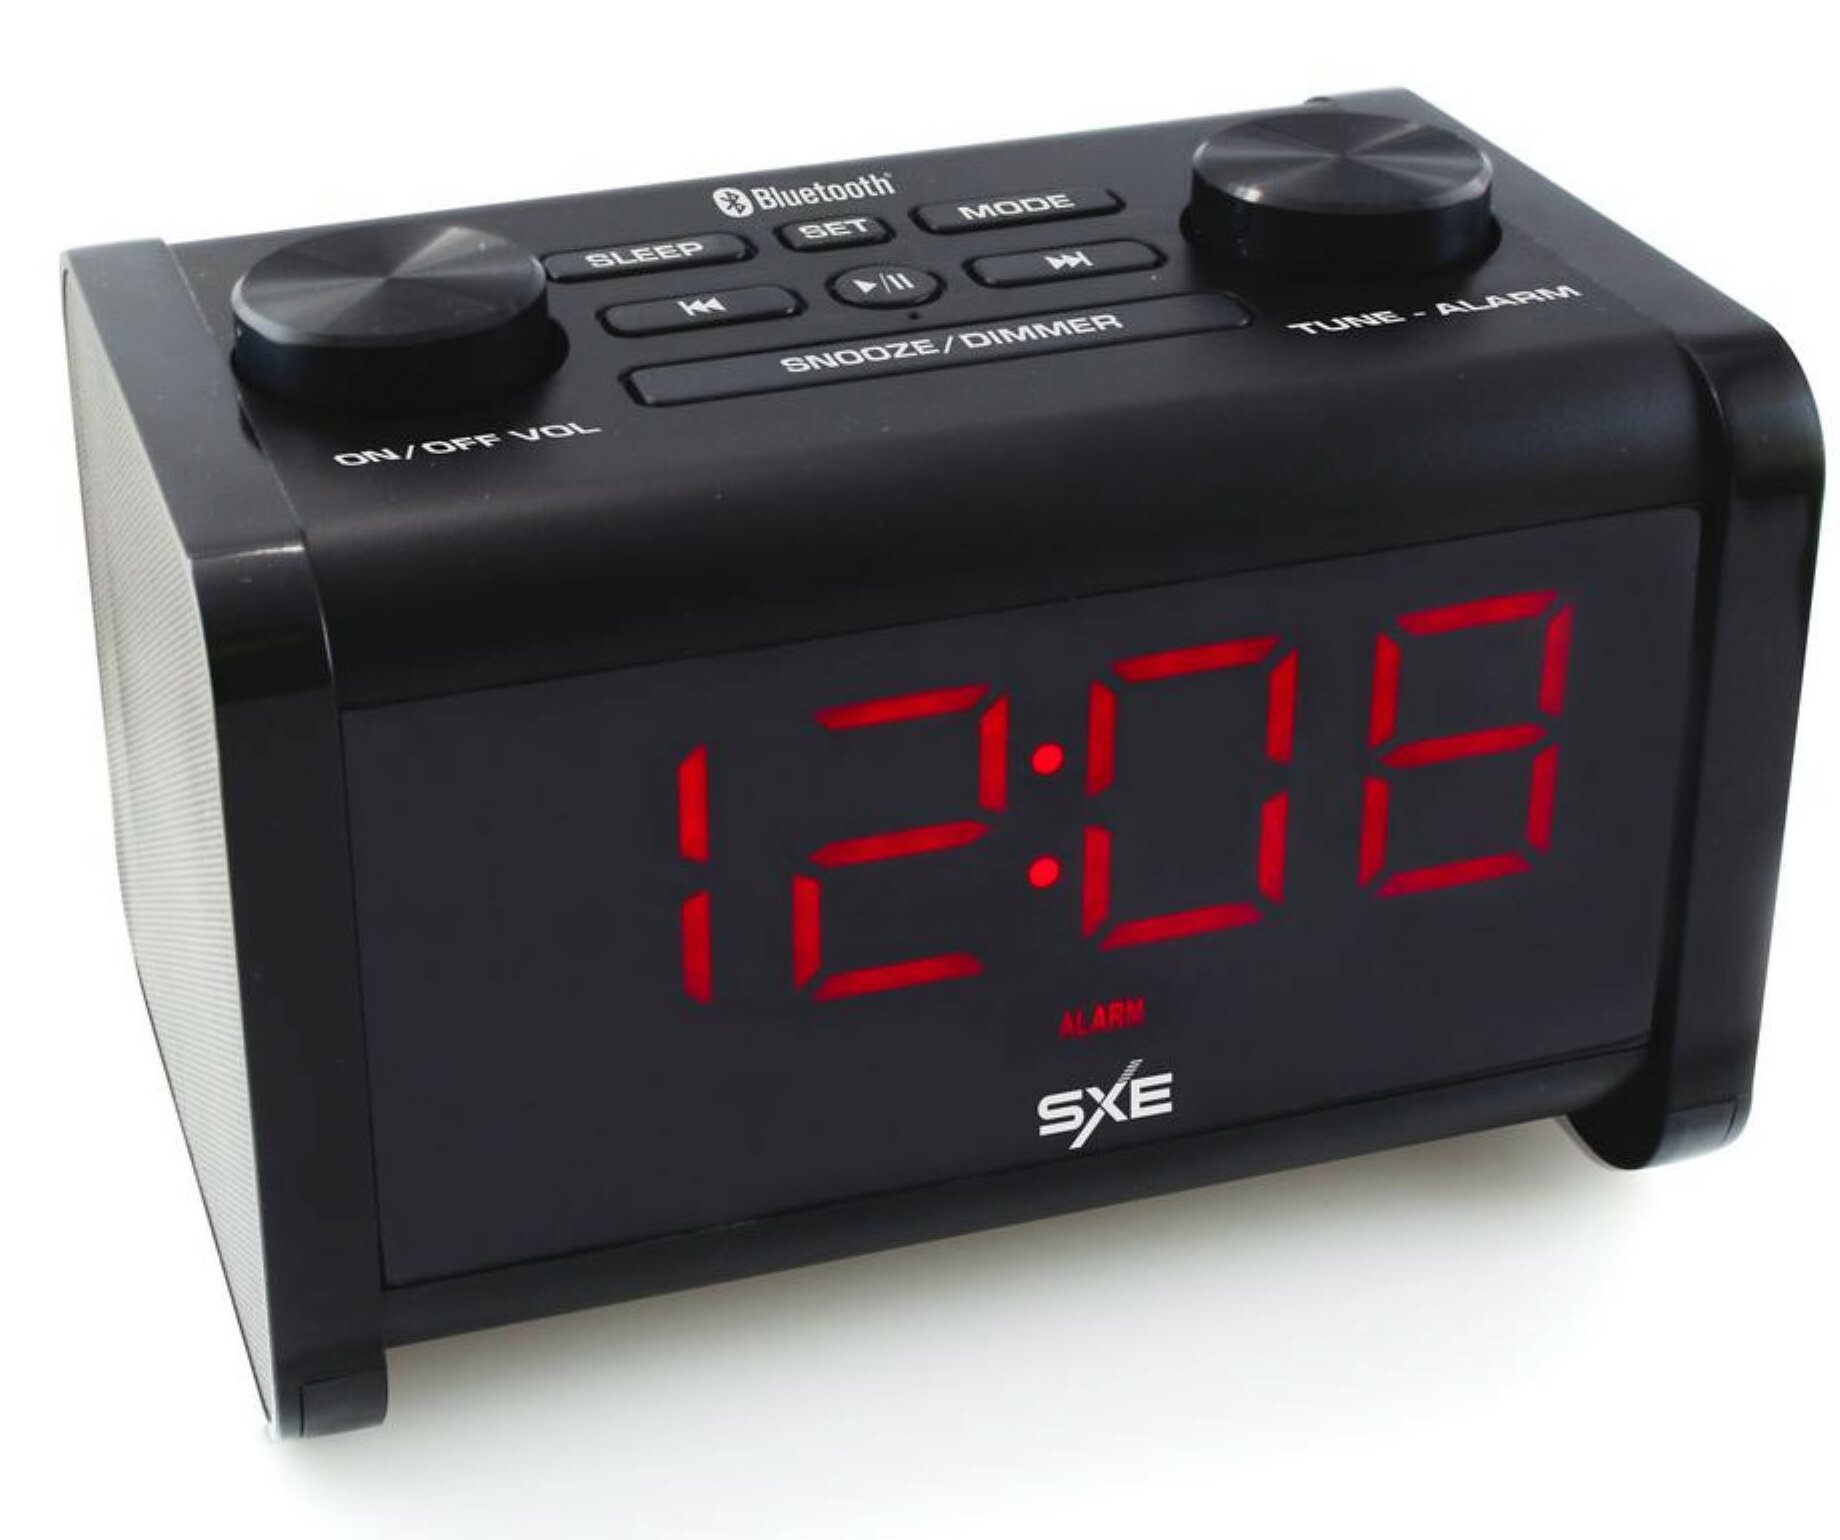 bluetooth speaker radio alarm clock